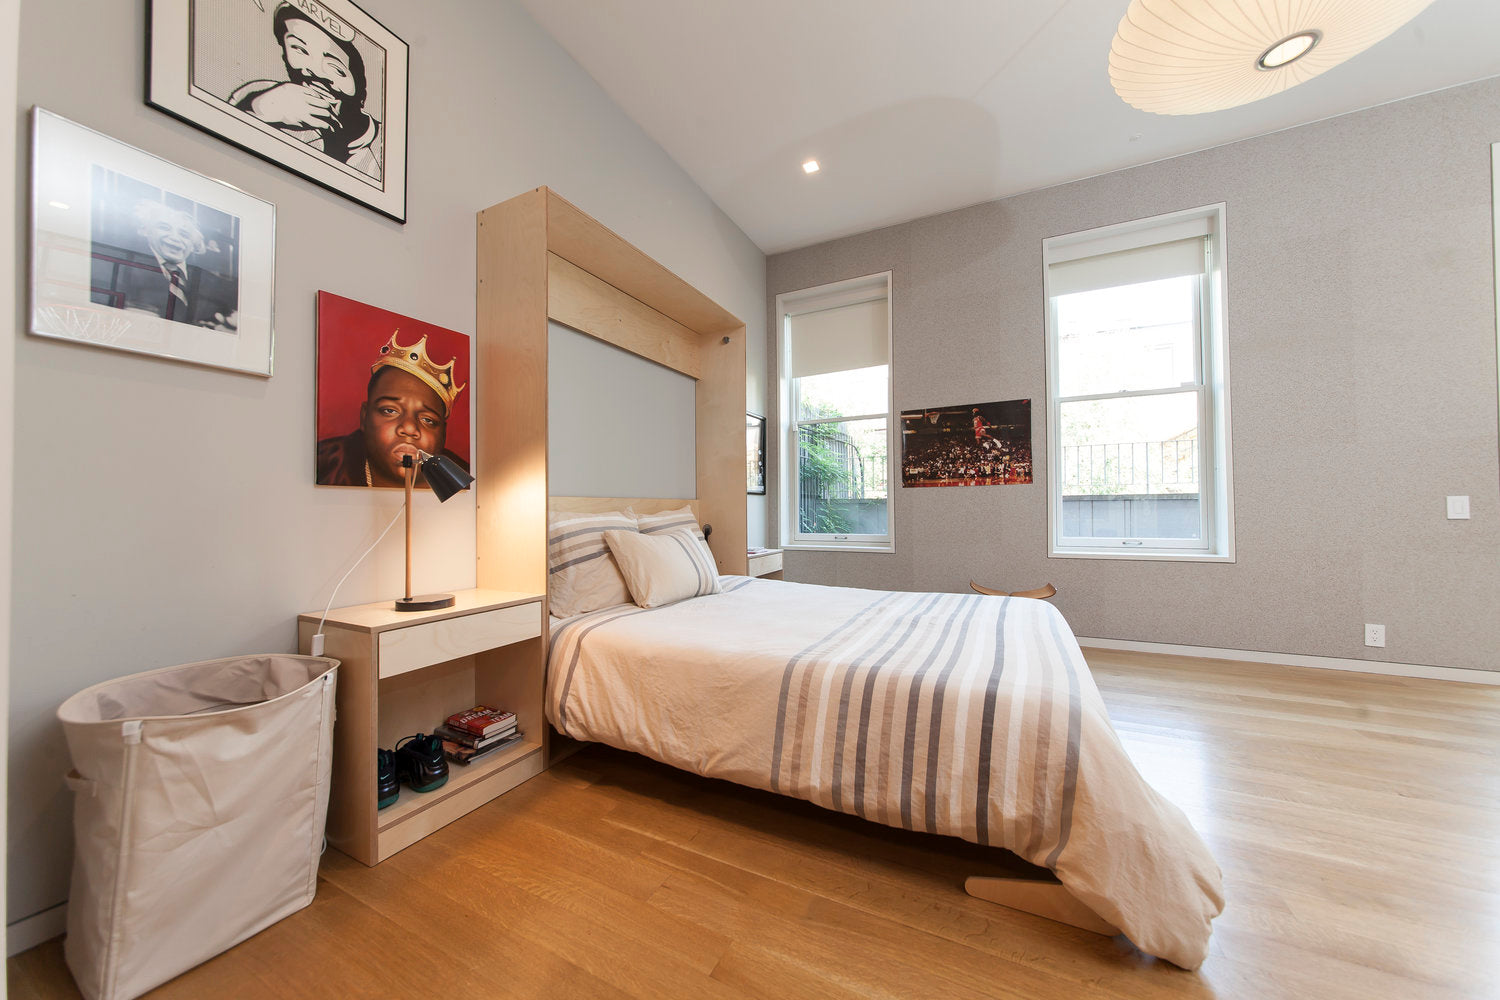 Modern bedroom, large bed, wall art, hardwood floor.